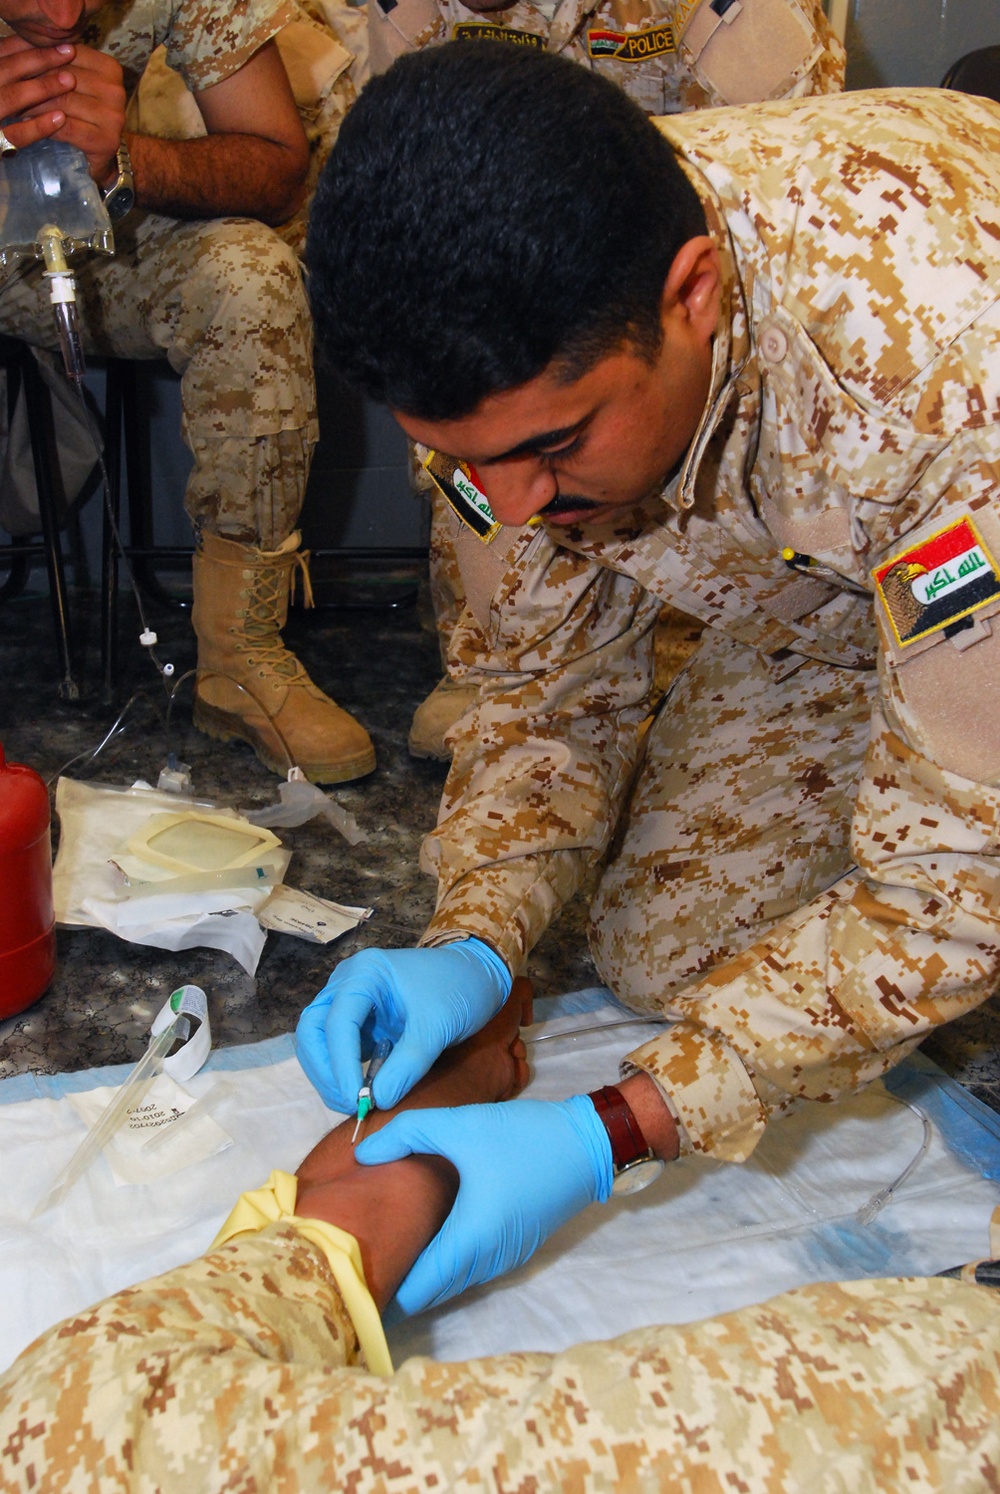 Iraqi police graduate medic training at Forward Operating Base Delta